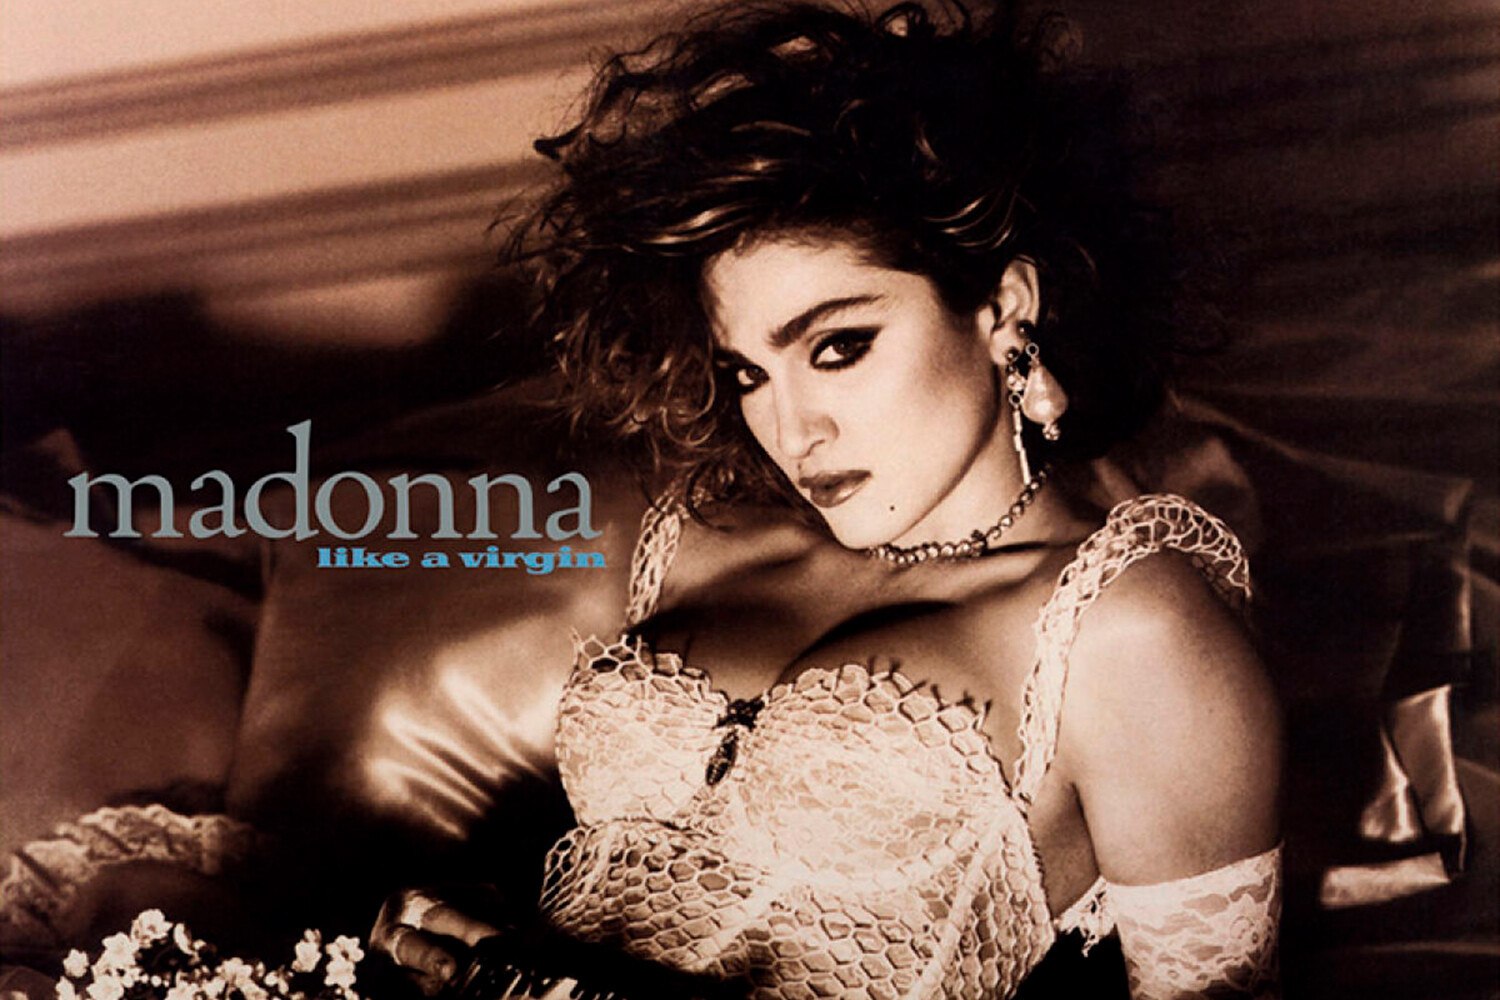 Альбом Мадонны Like a Virgin признан национальным достоянием США